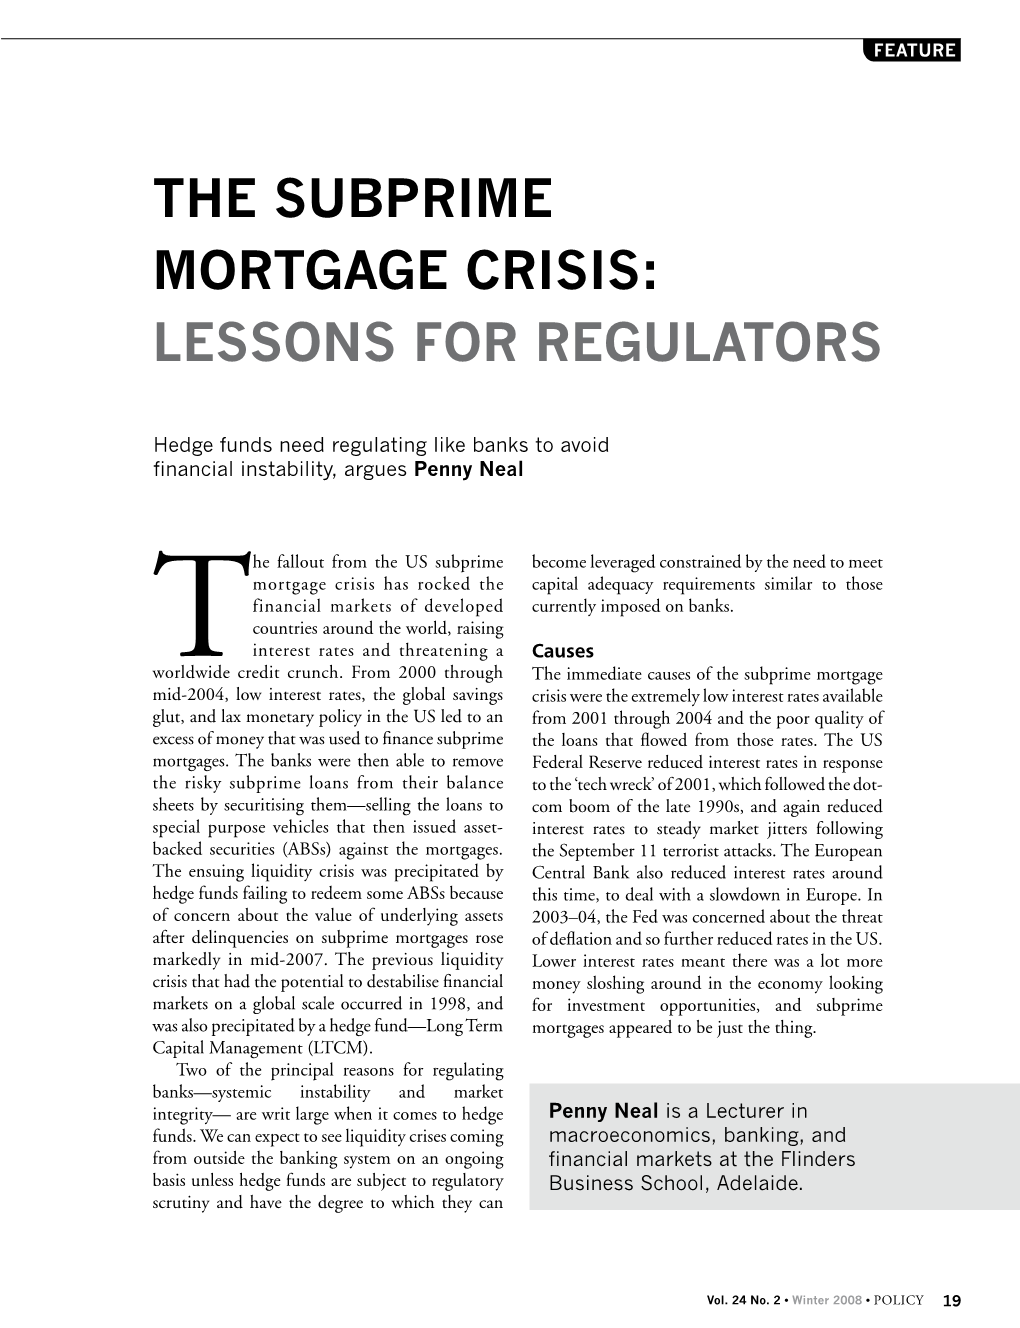 The Subprime Mortgage Crisis: Lessons for Regulators